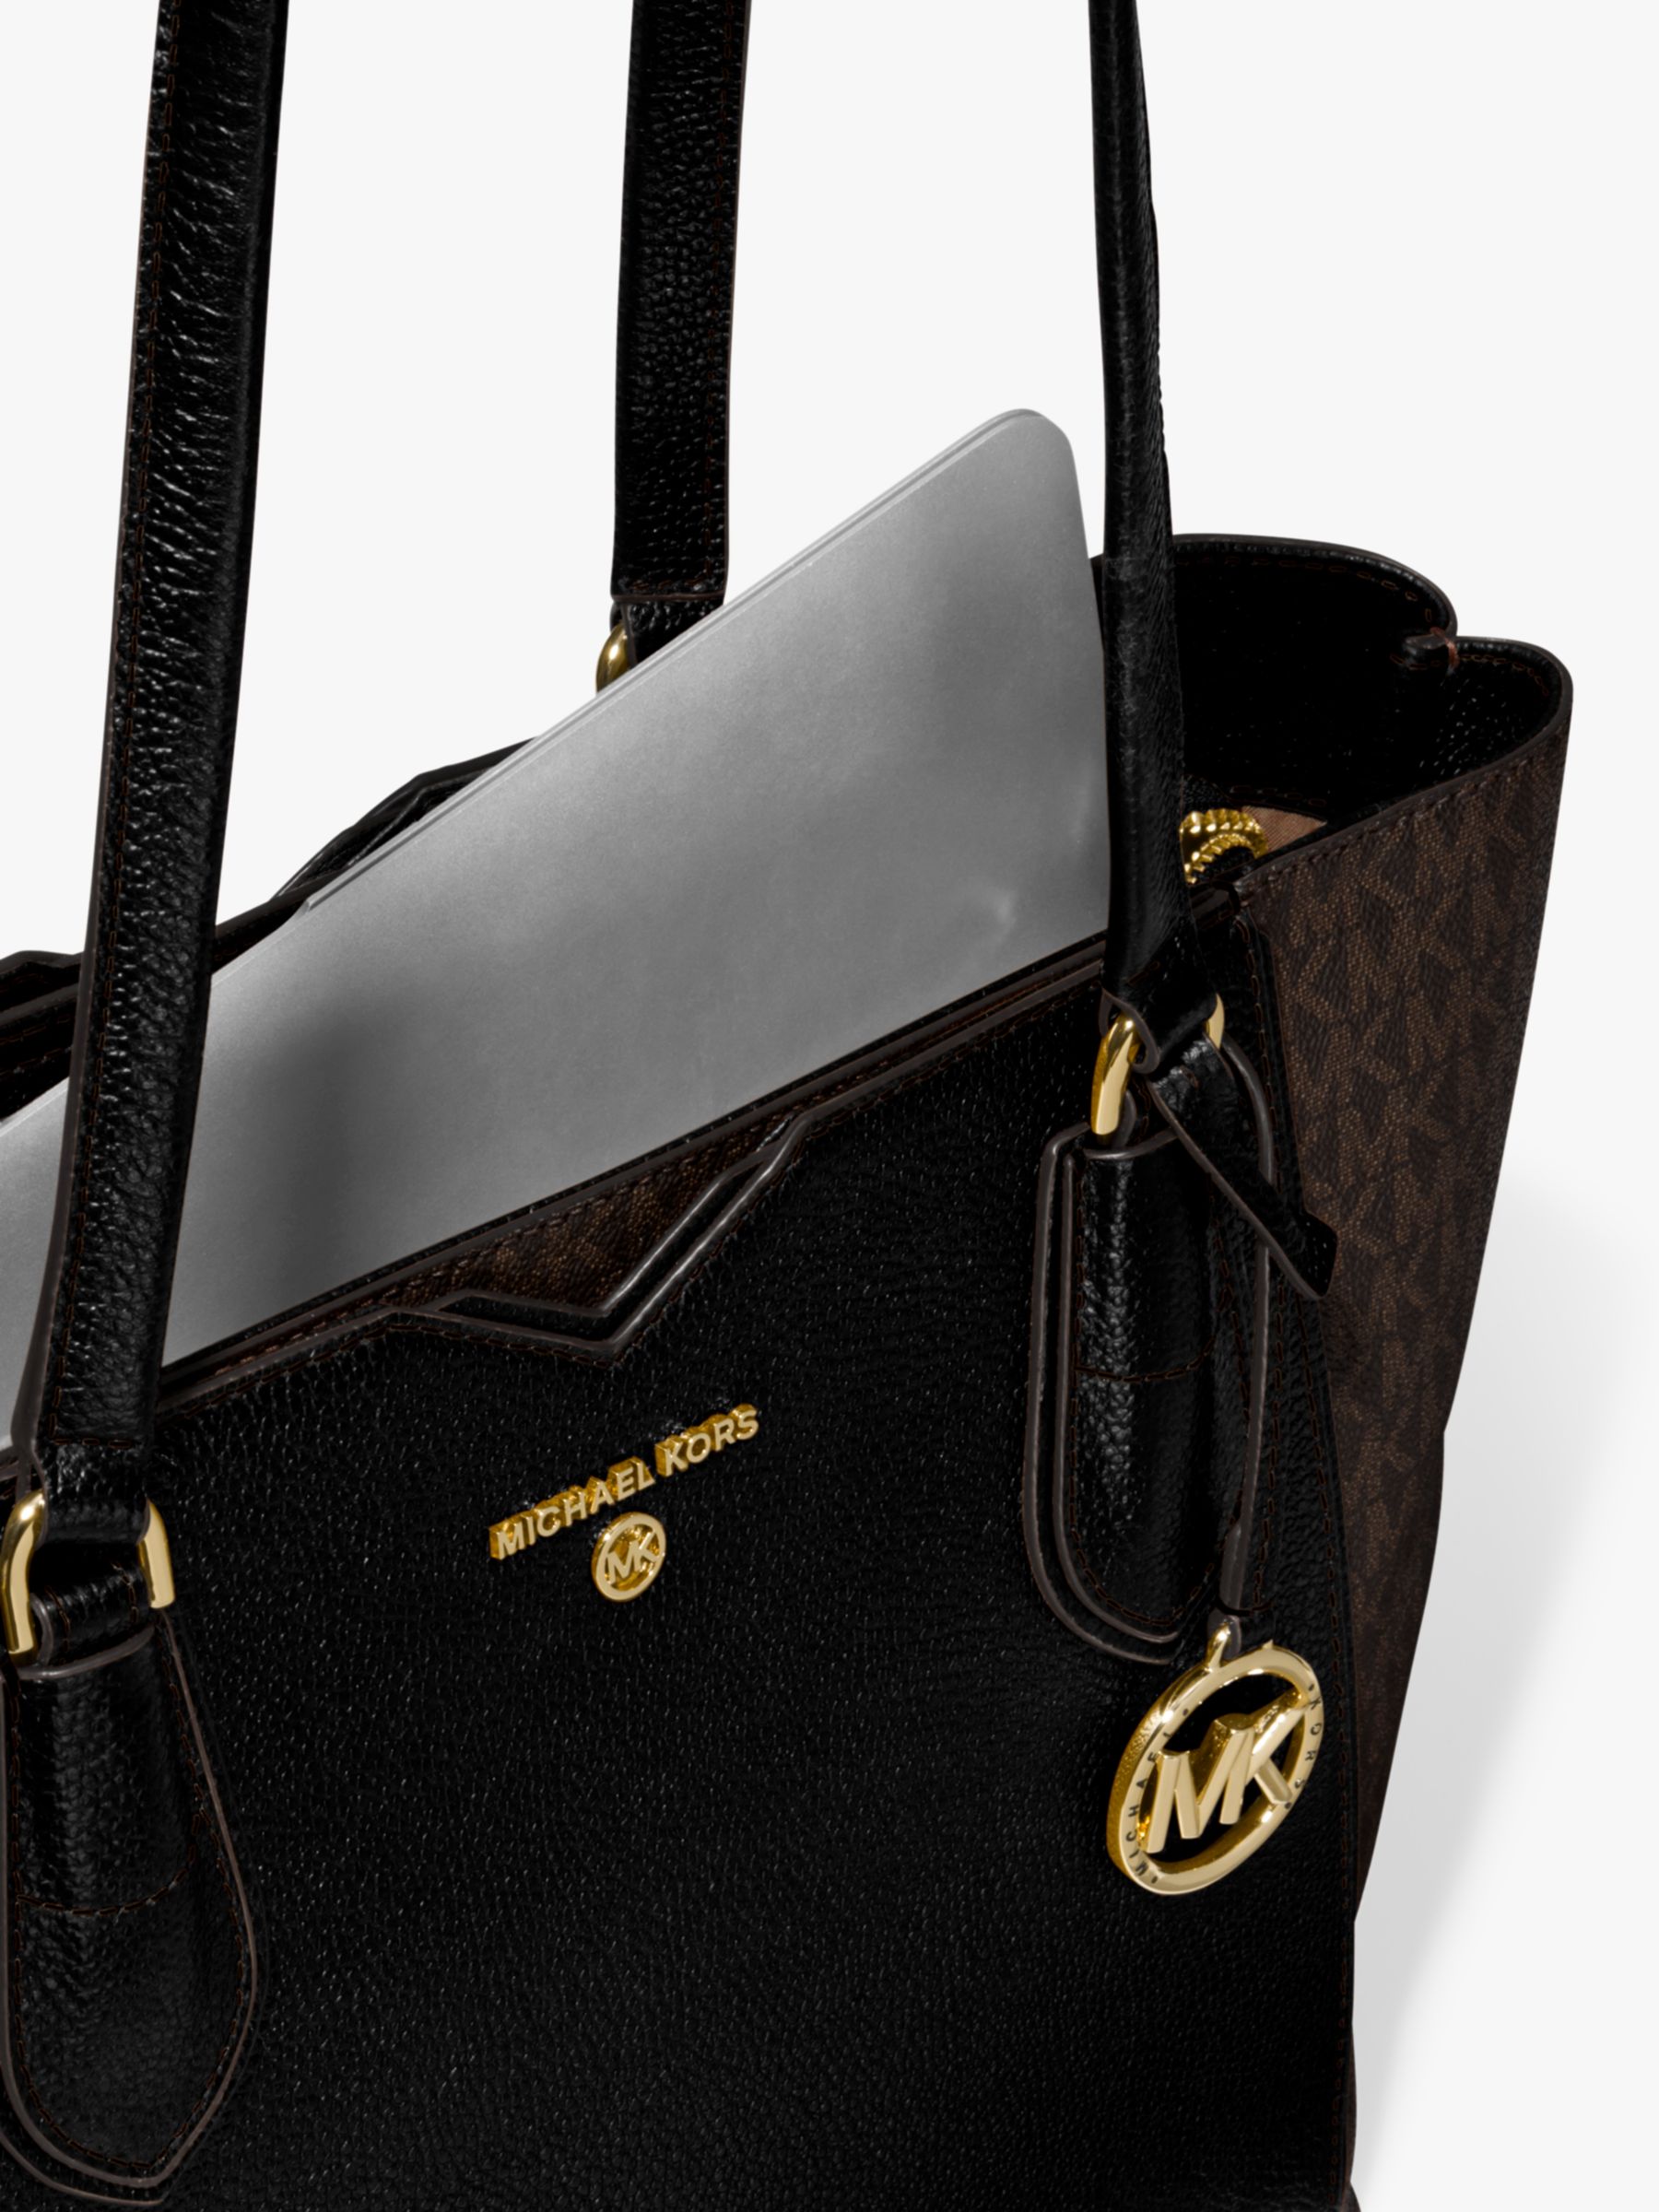 michael kors black and brown purse